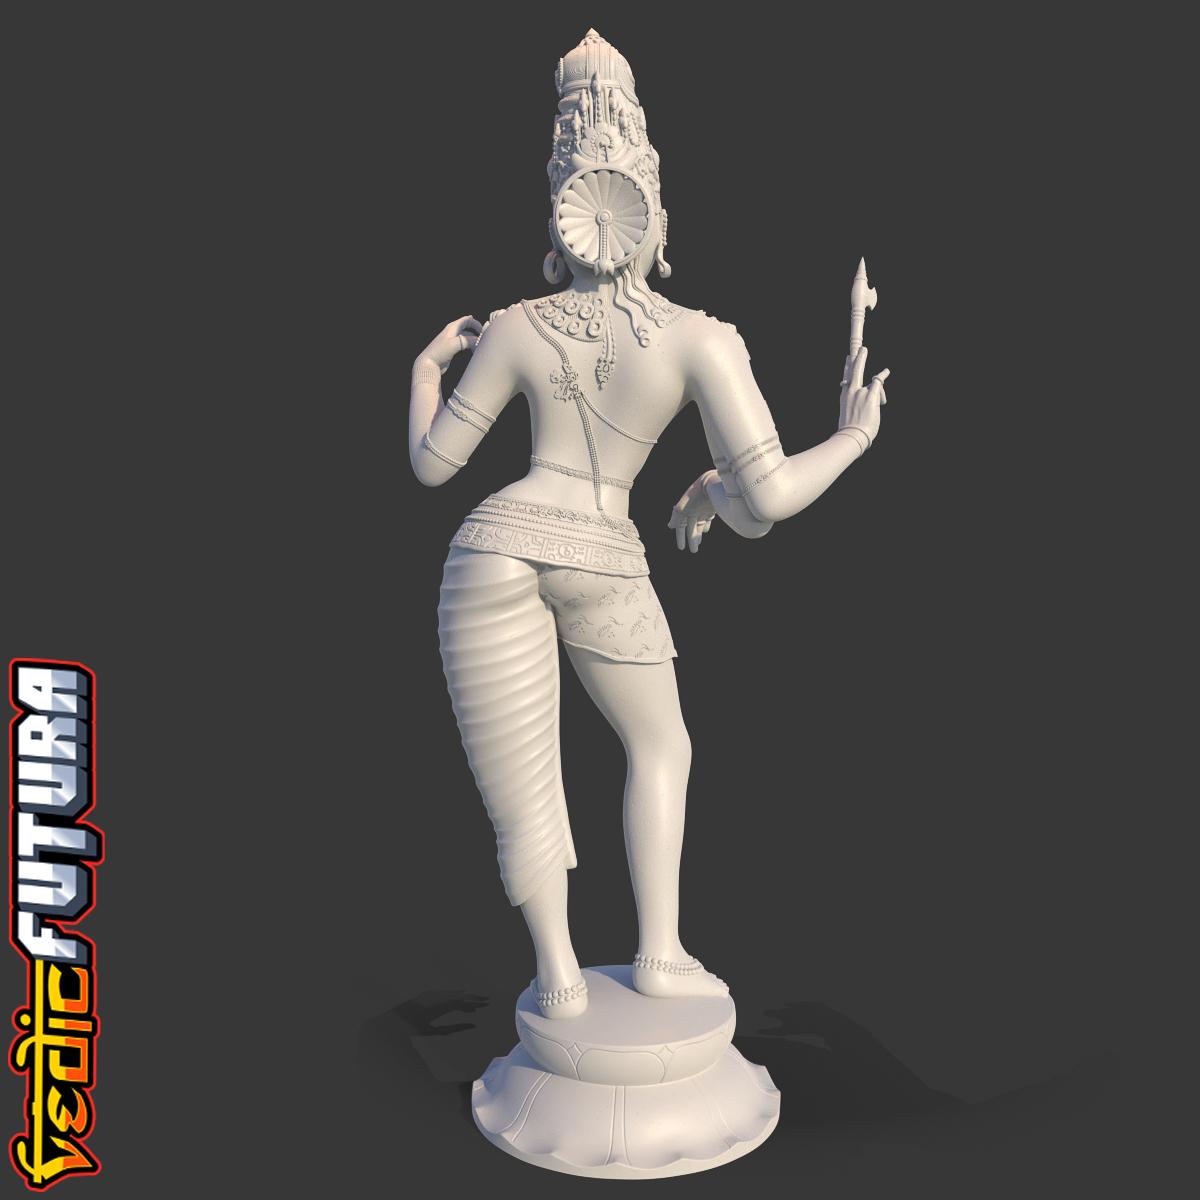 Ardhanarishvara - "the Lord Who is half woman." 3d model